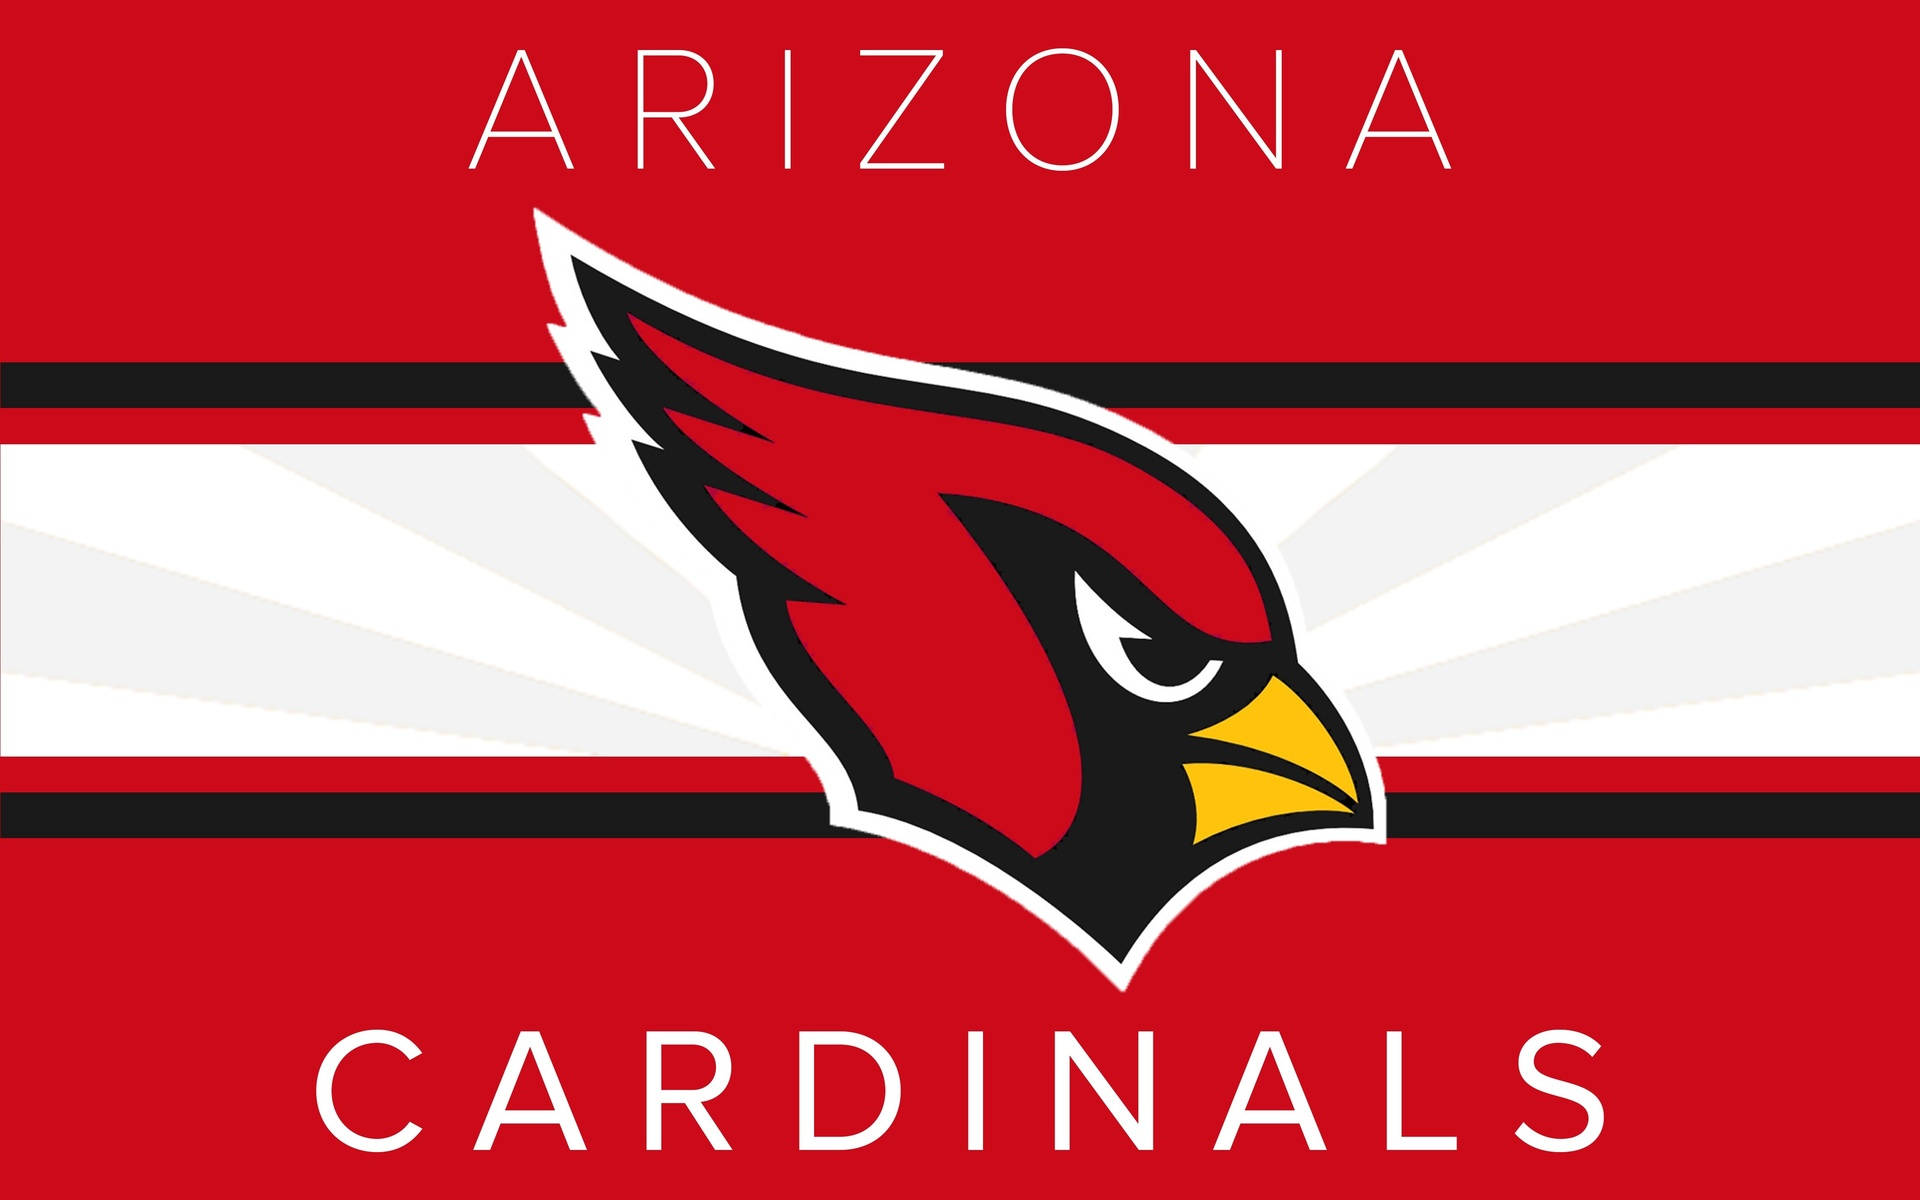 Arizona Cardinals Big Red Flag Background